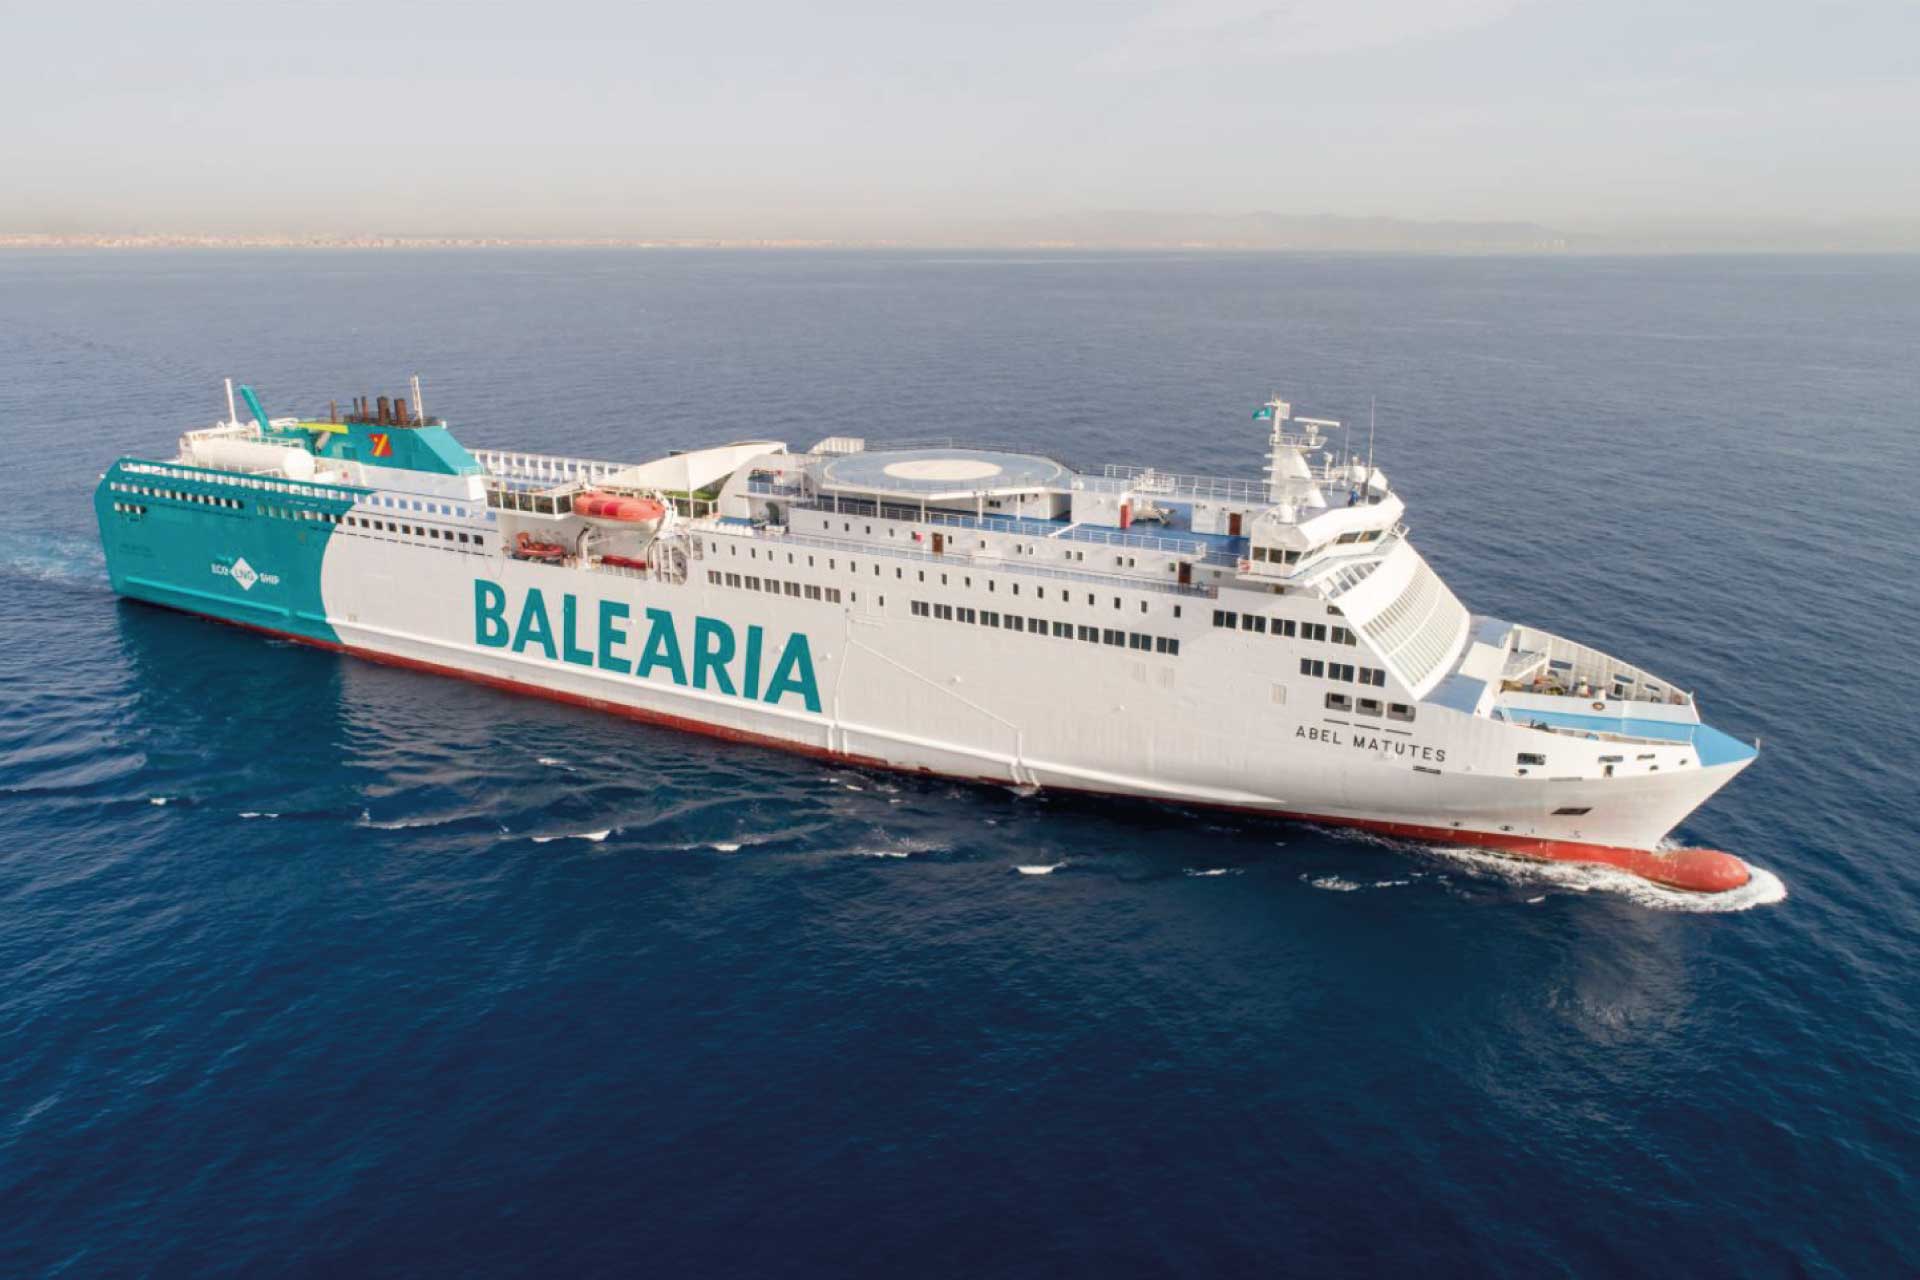 Fähren nach Mallorca